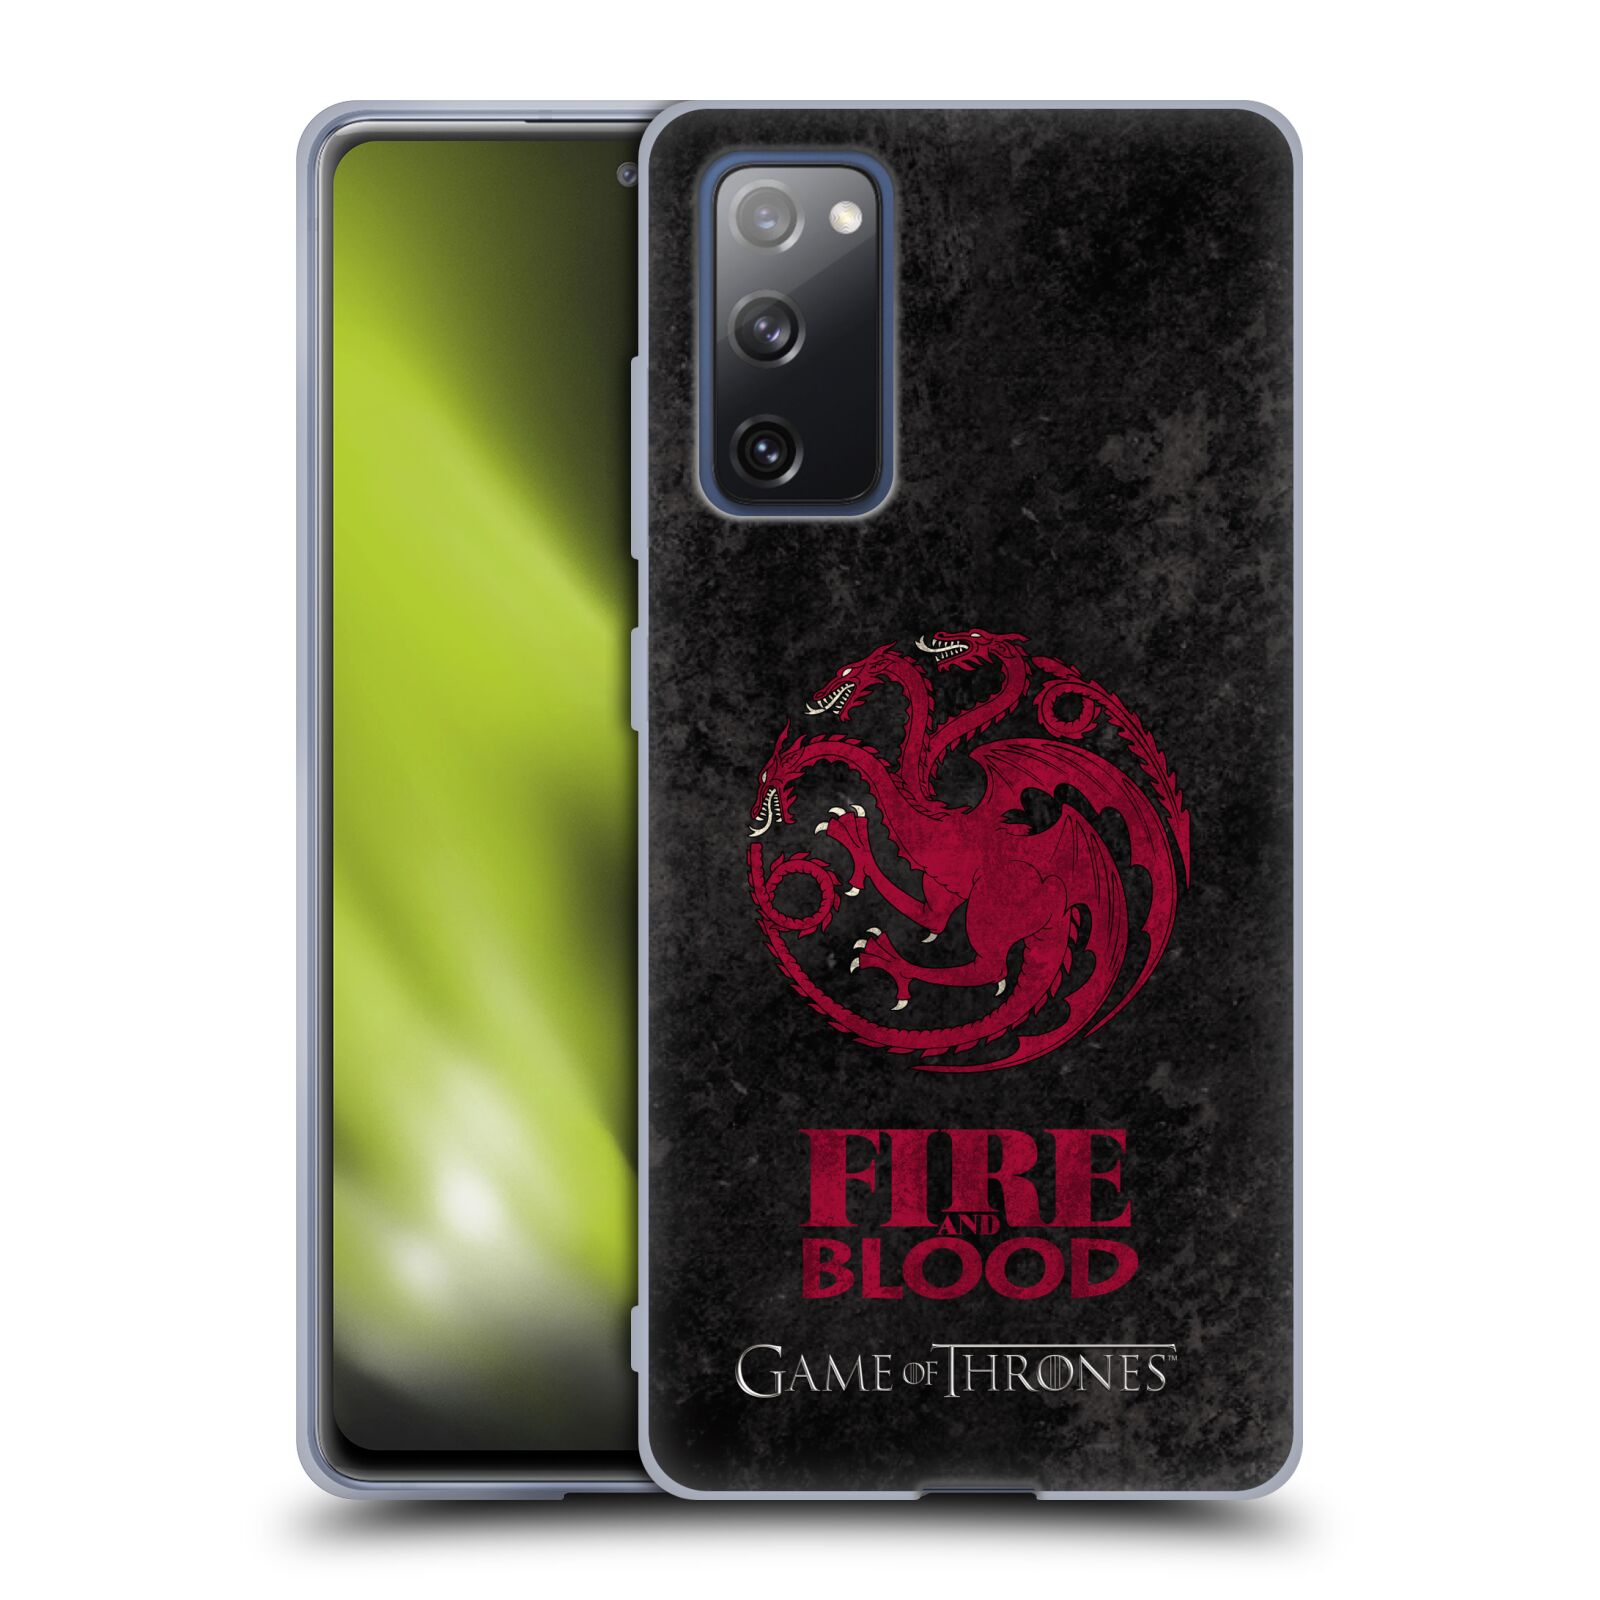 Silikonové pouzdro na mobil Samsung Galaxy S20 FE - Head Case - Hra o trůny - Sigils Targaryen - Fire and Blood (Silikonový kryt, obal, pouzdro na mobilní telefon Samsung Galaxy S20 FE s motivem Hra o trůny - Sigils Targaryen - Fire and Blood)